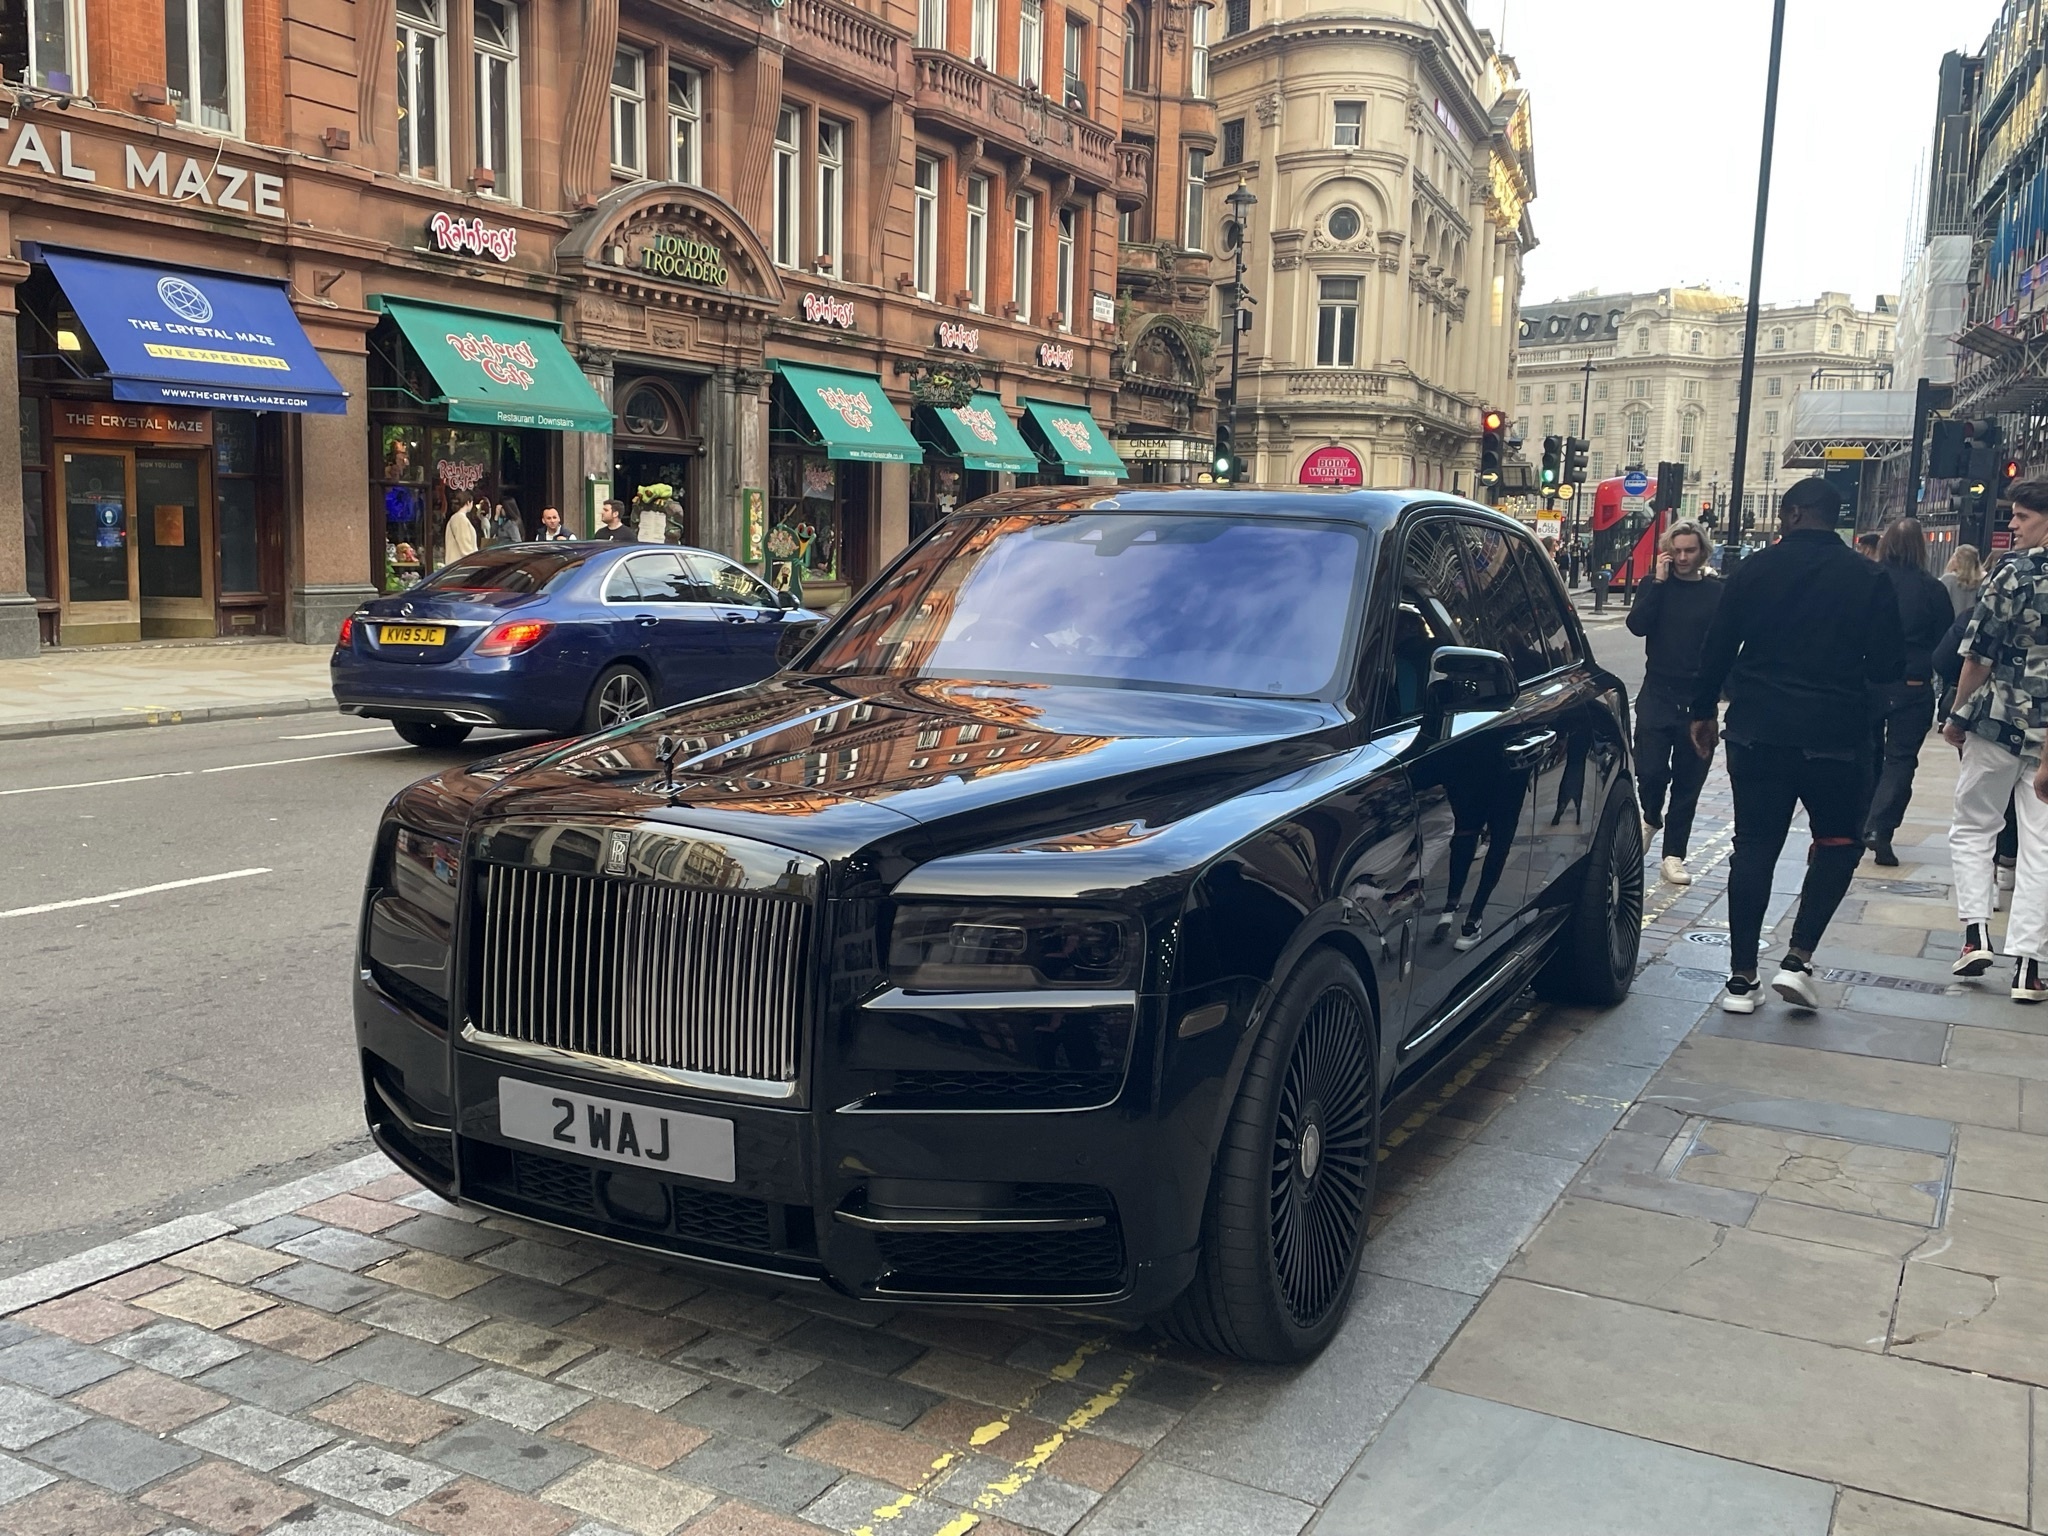 Ein Rolls Royce in Central London, 2021.